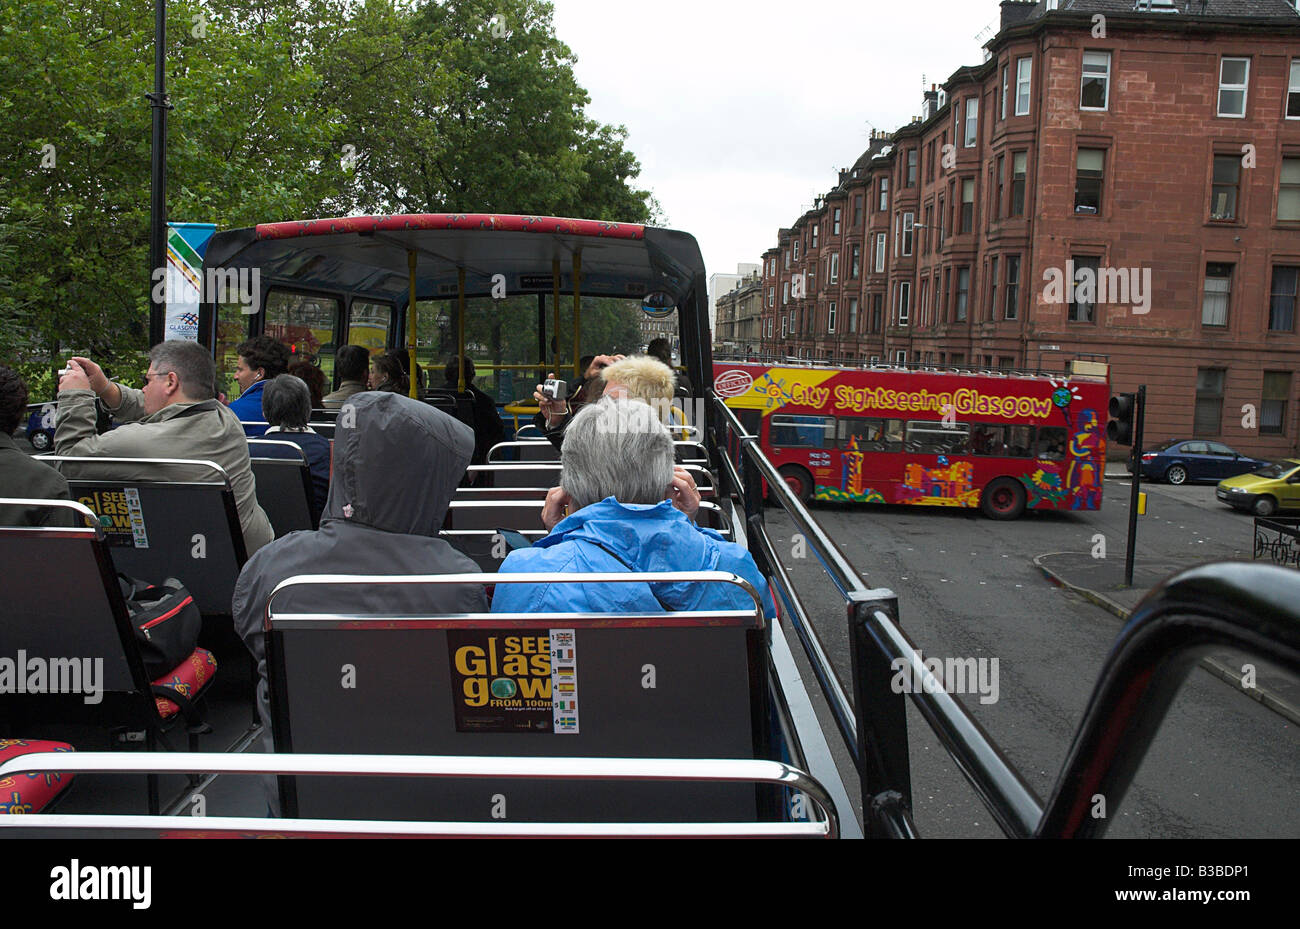 Glasgow Sight Seeing Bus Stock Photo